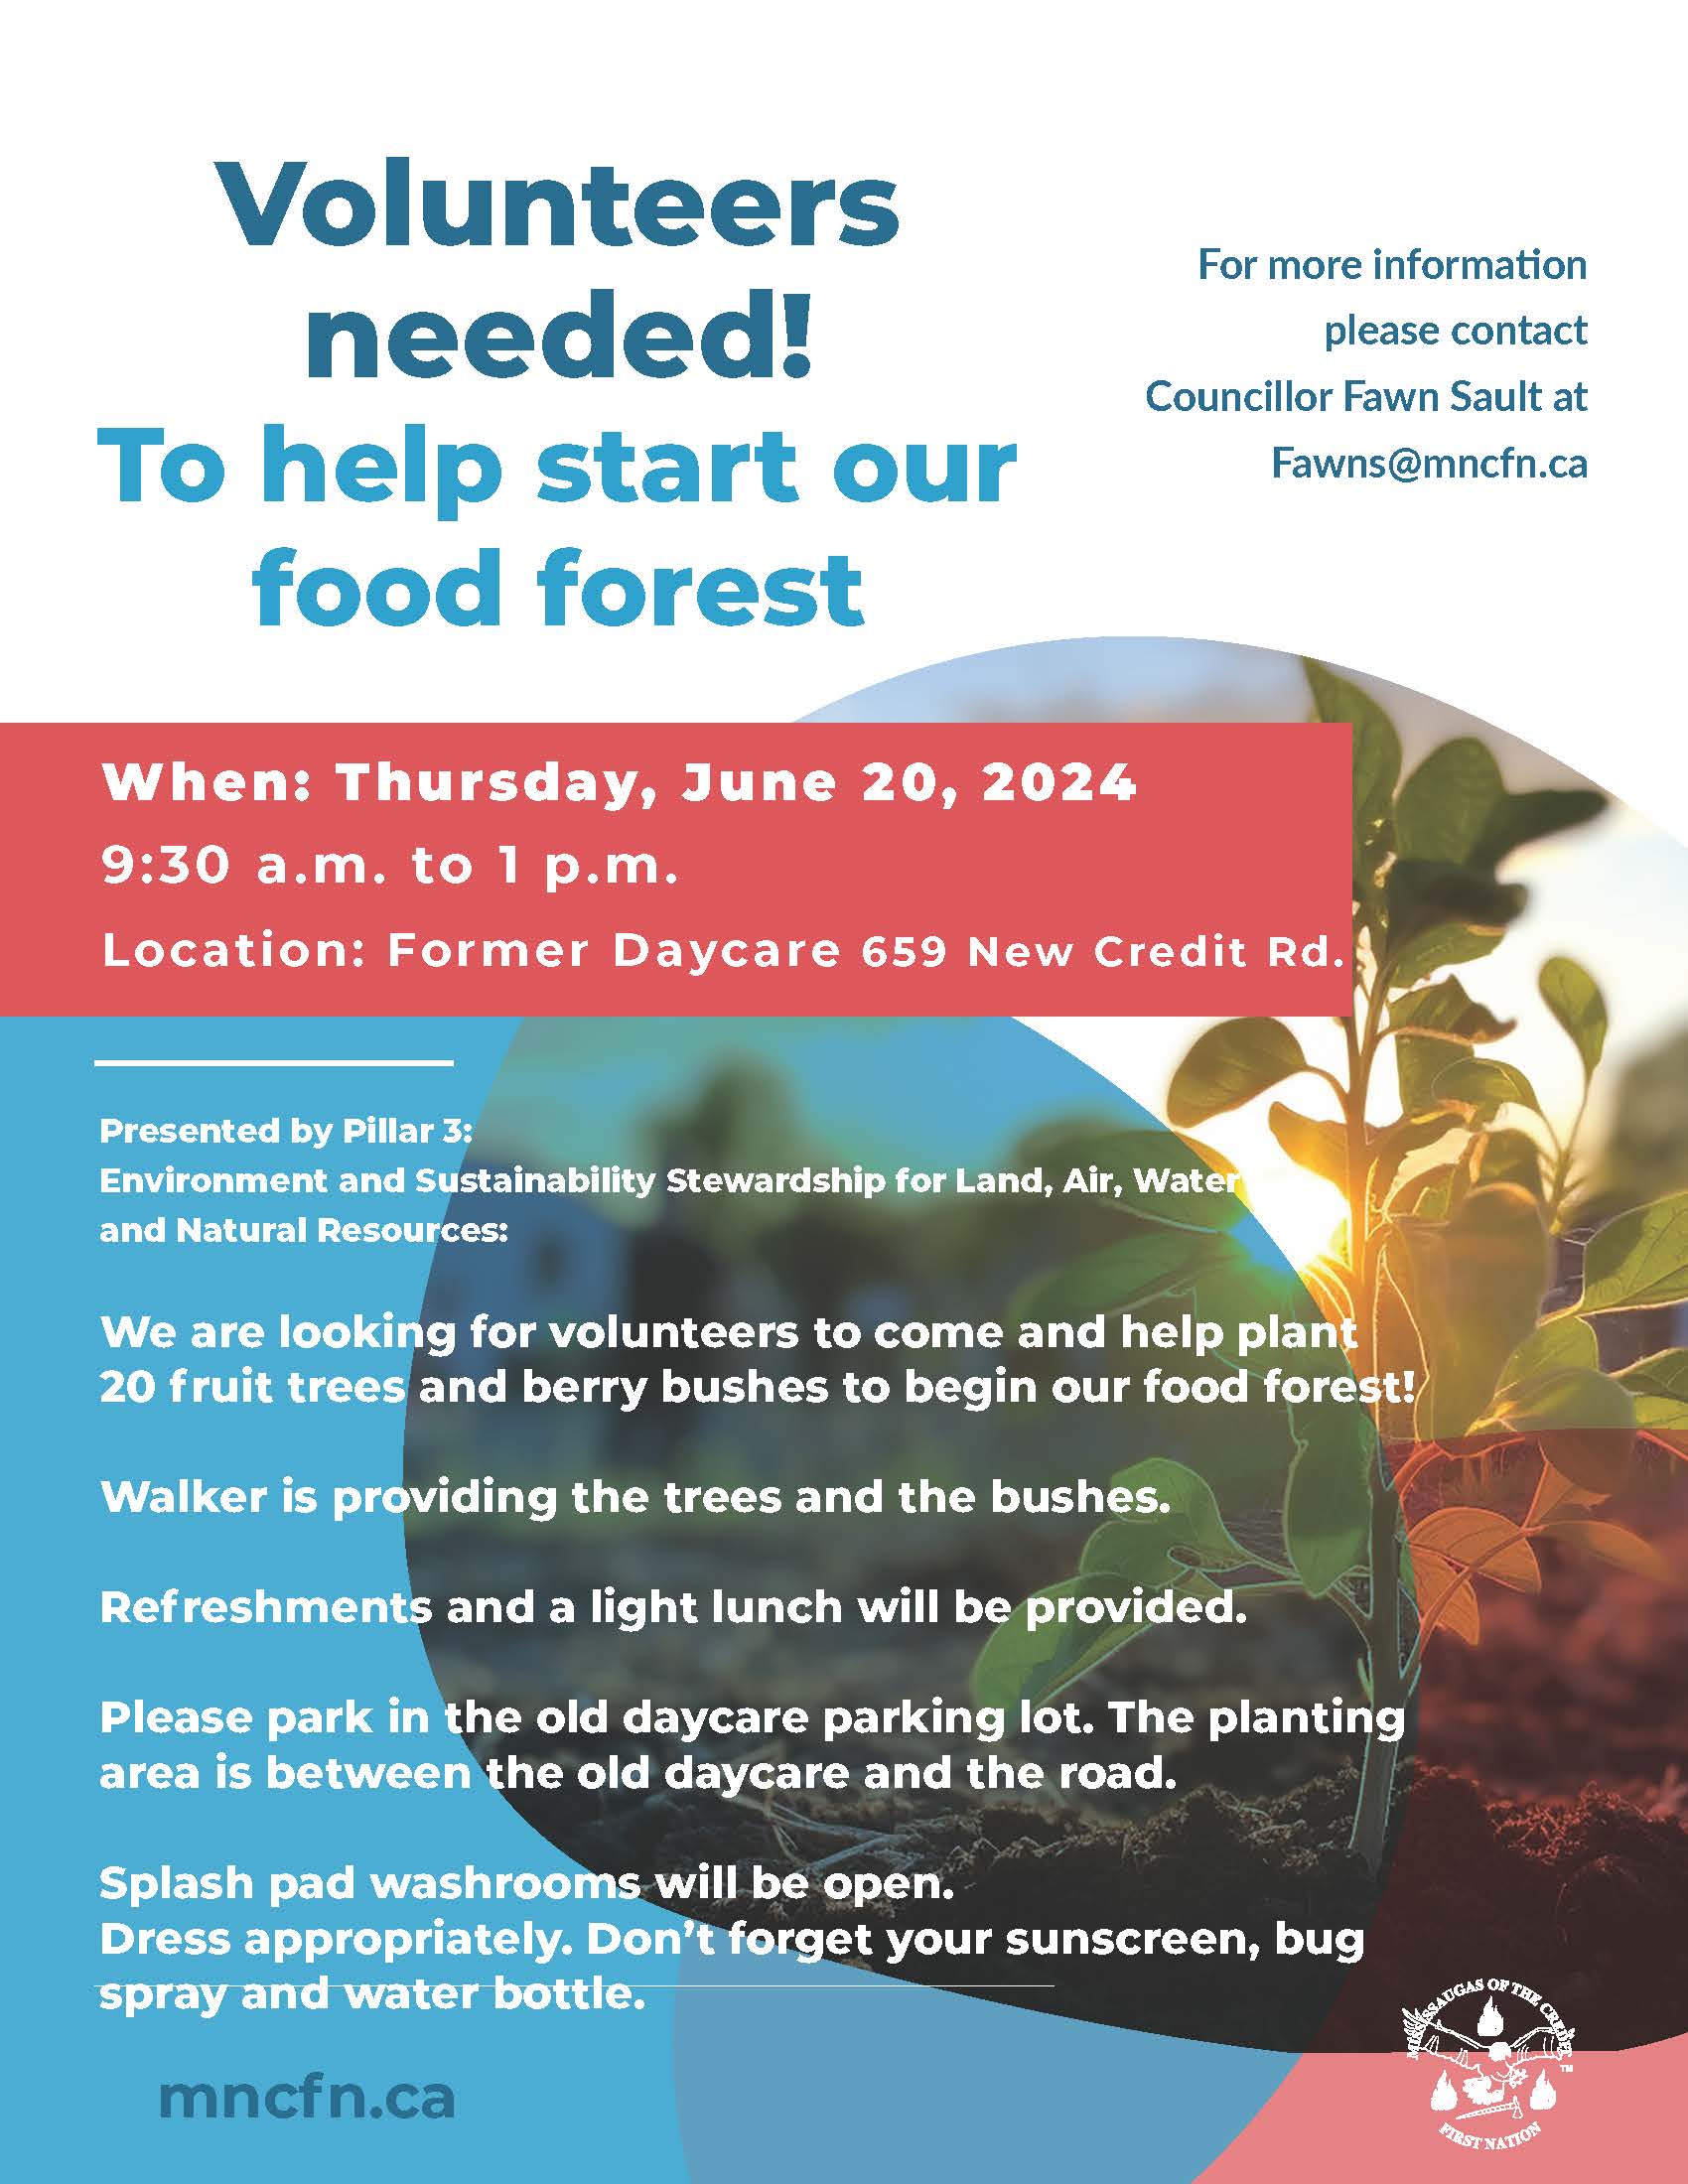 Volunteers needed to help plant MCFN's Food Forest